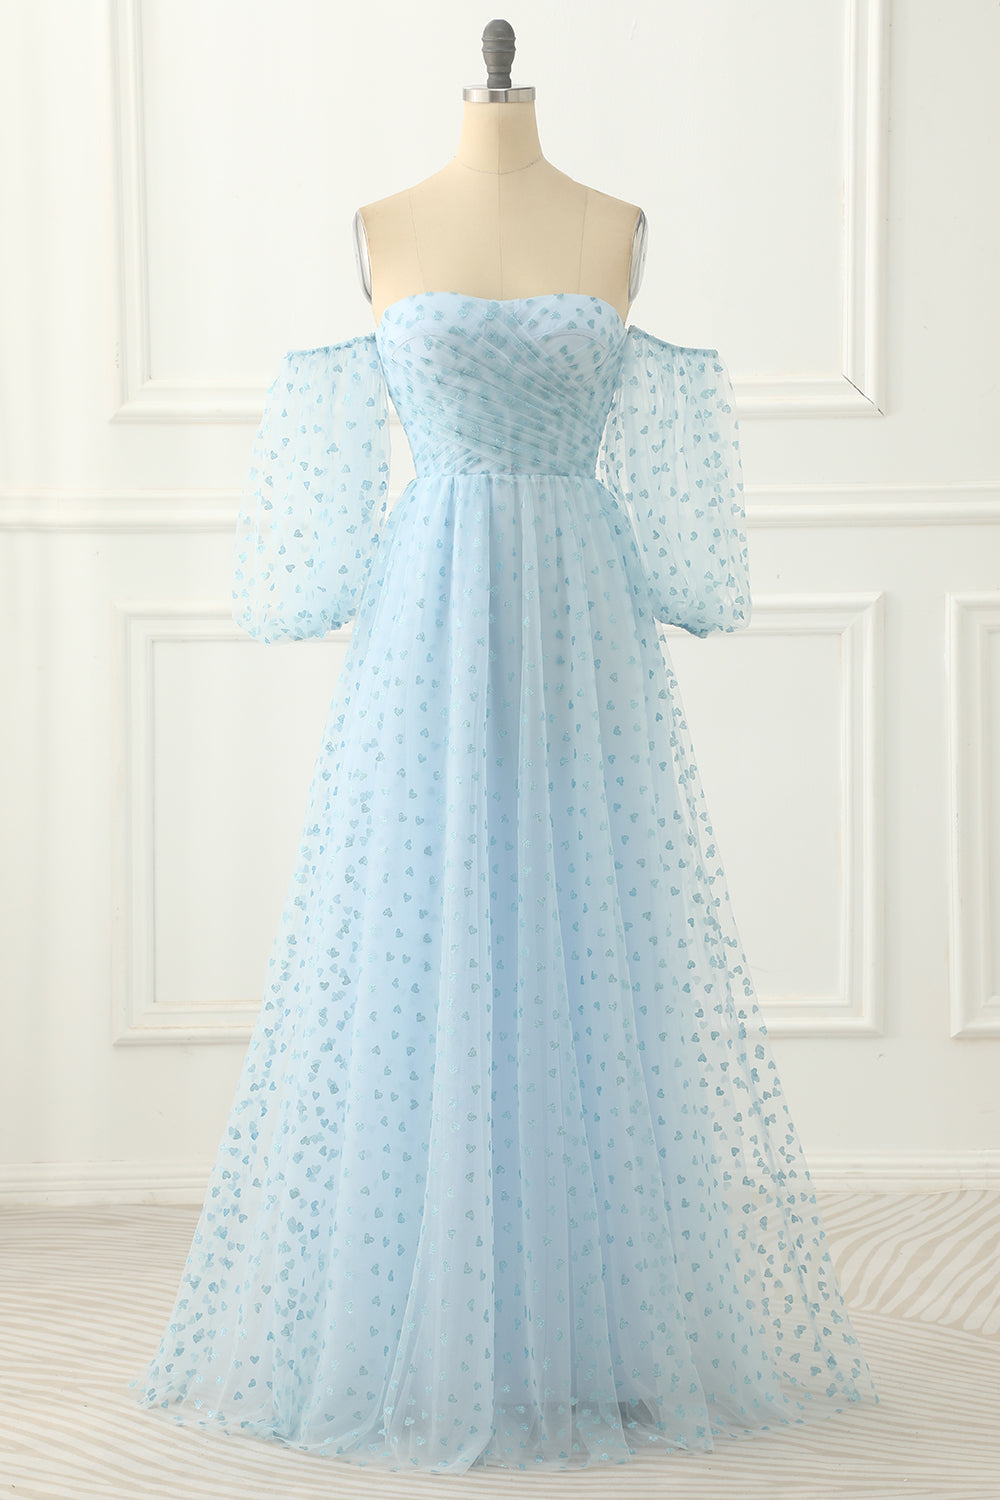 Sky Blue Tulle Off the Shoulder Long Prom Dress